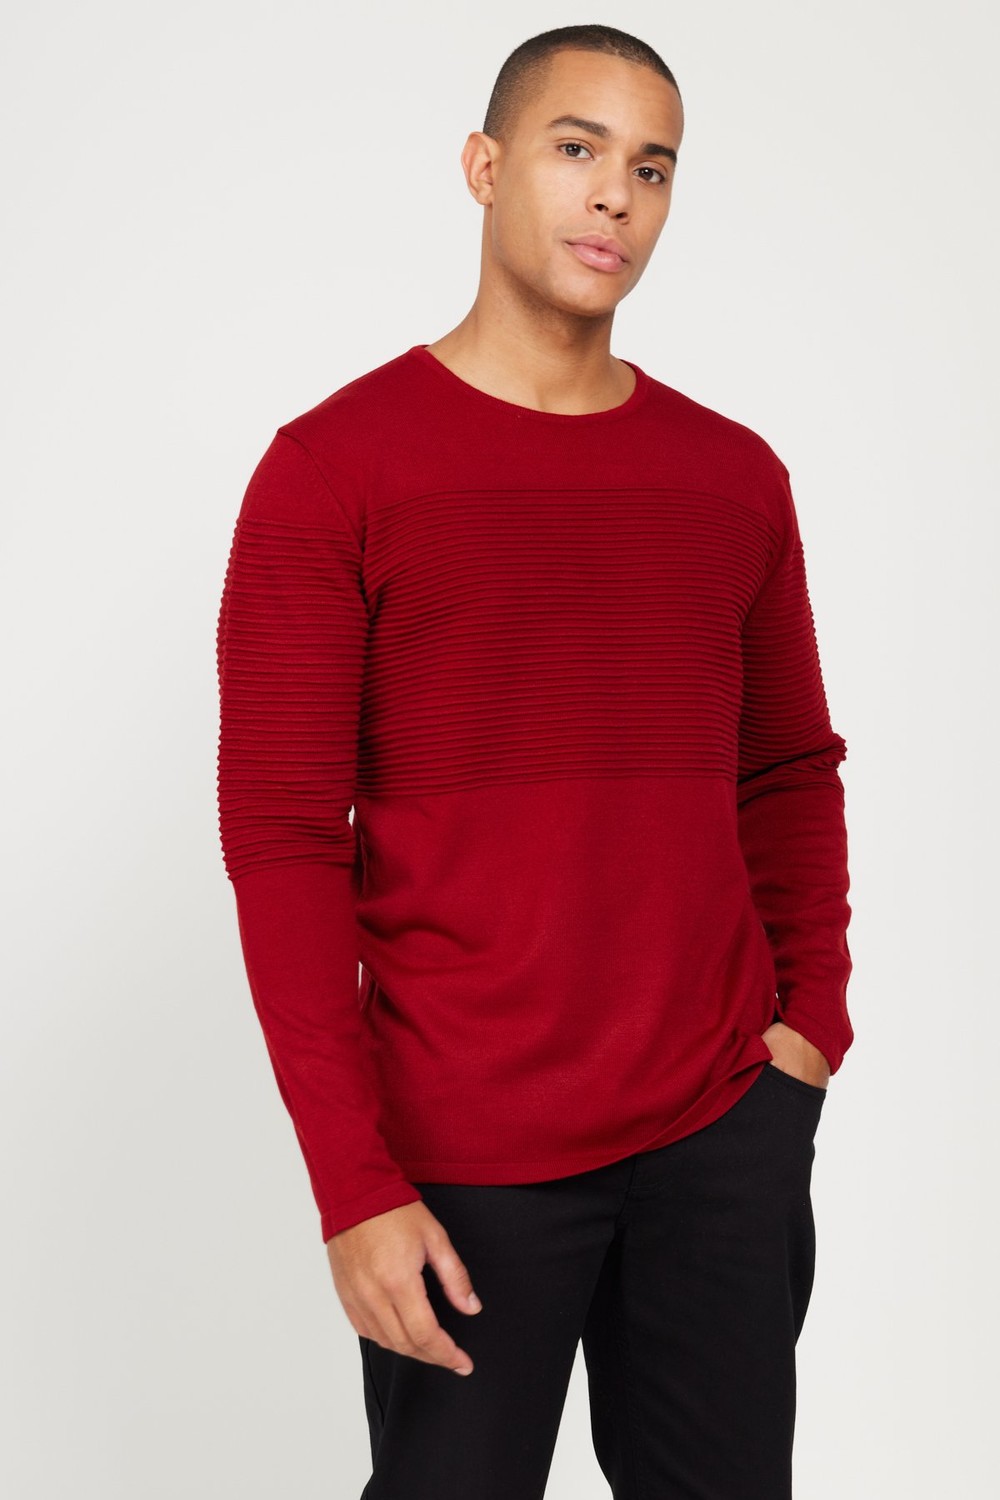 AC&Co / Altınyıldız Classics Men's Red Anti-pilling and Anti-Pilling Standard Fit Crew Neck Textured Knitwear Sweater.